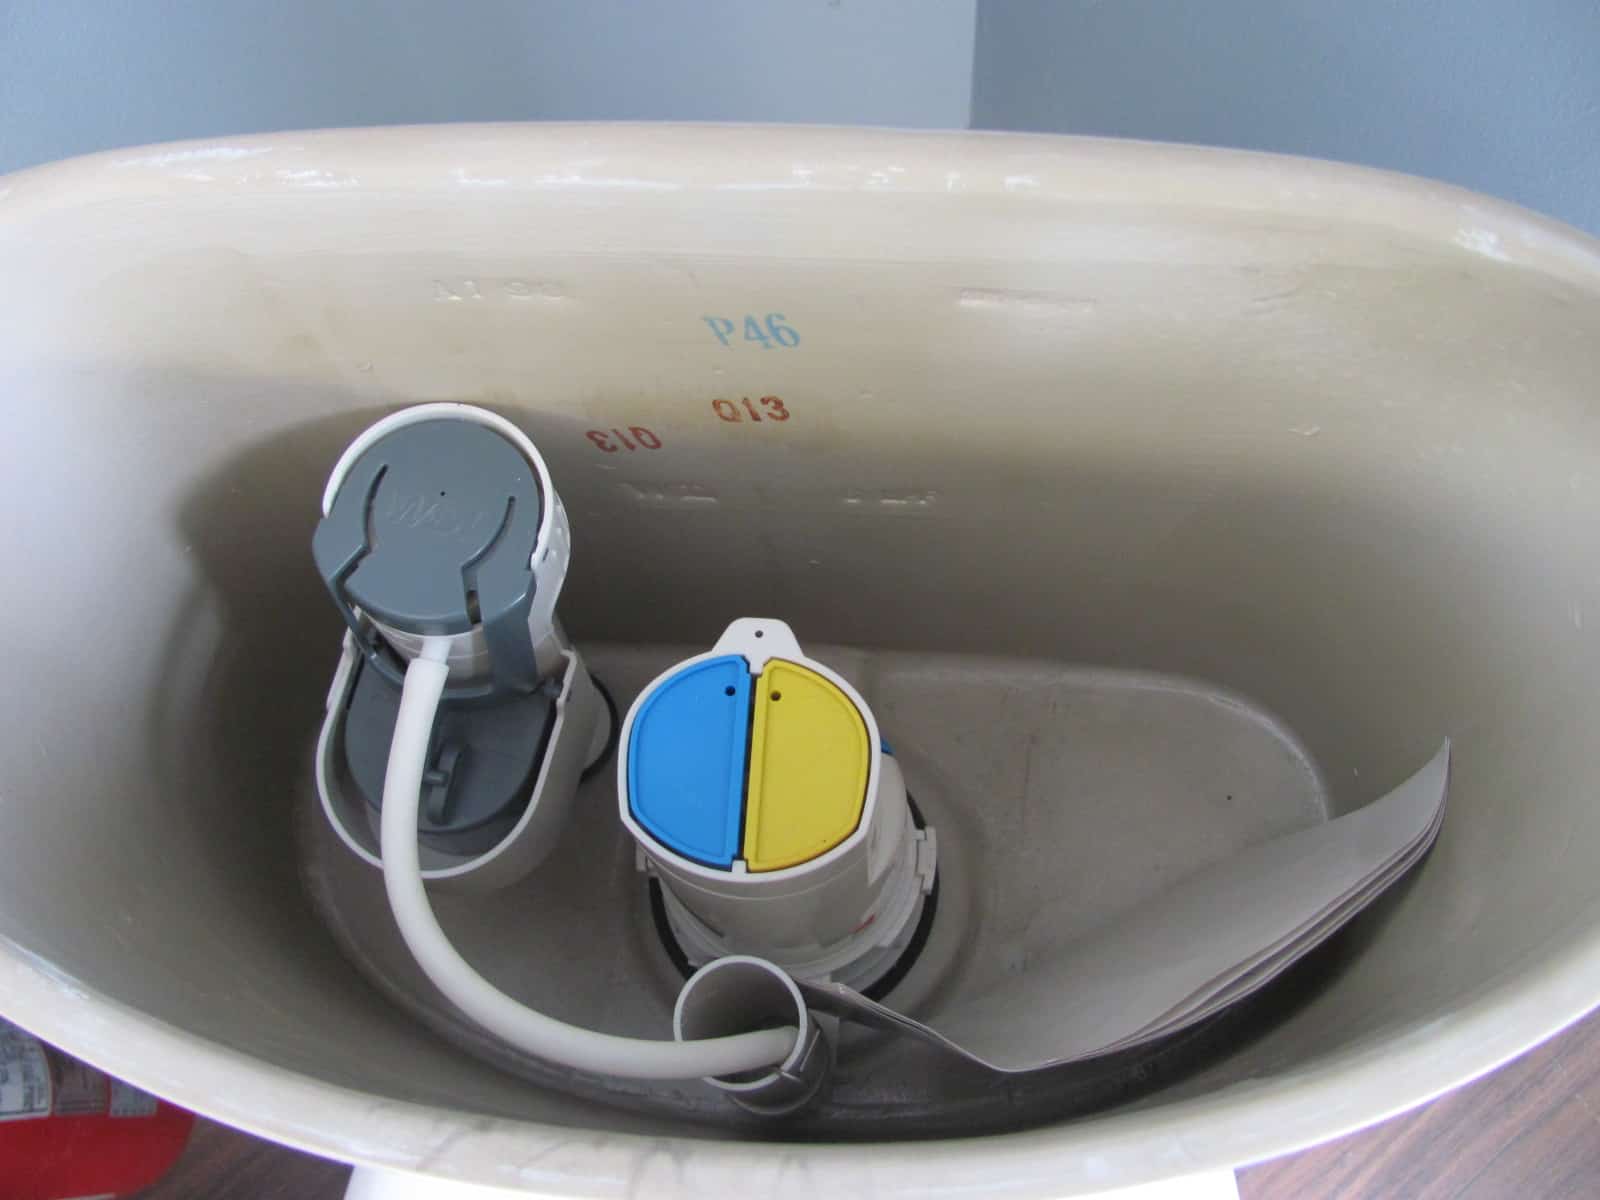 Pressure-assisted flush system toilet retrofit toto